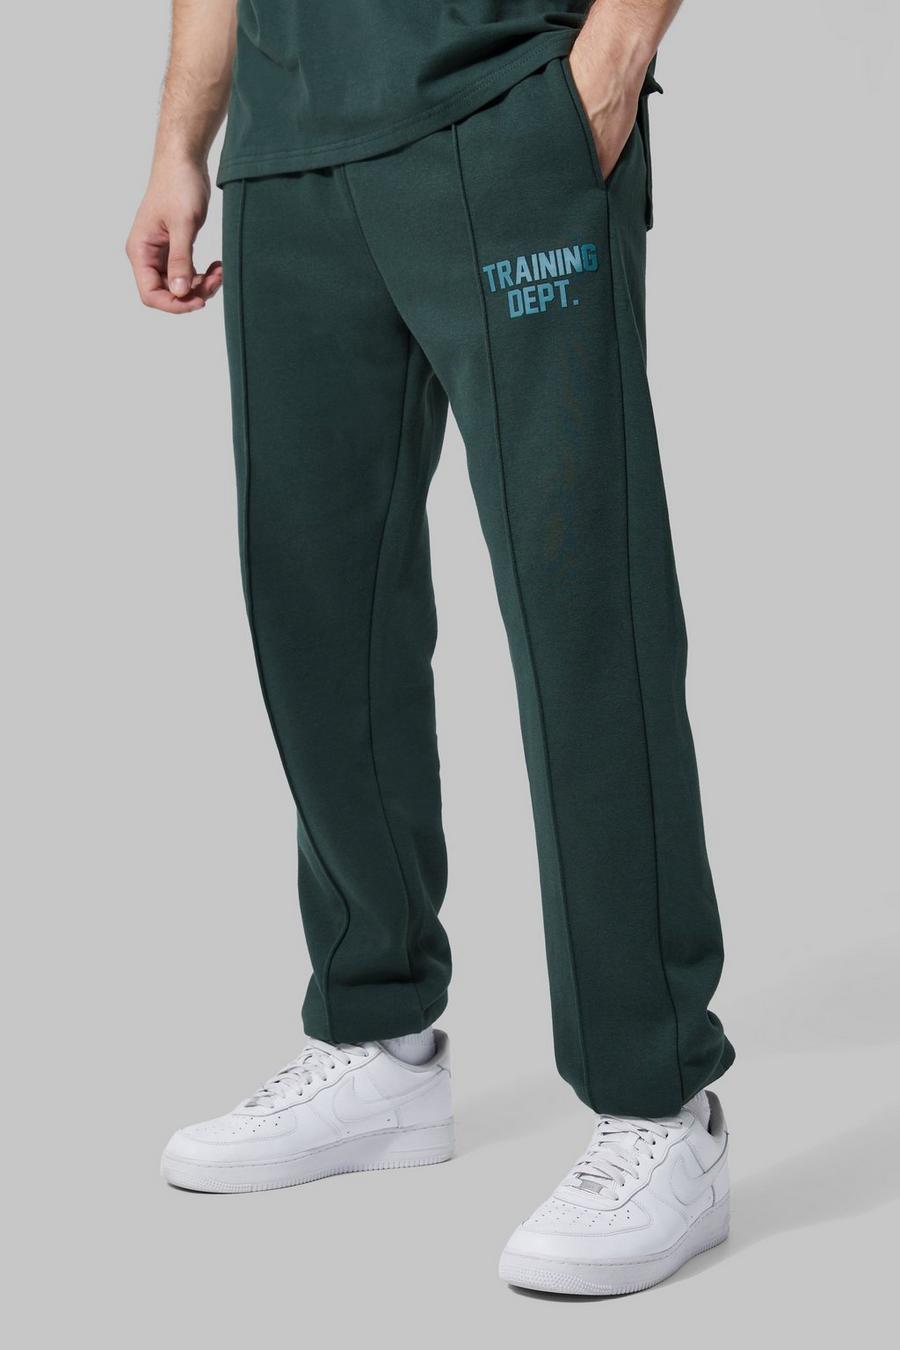 Pantaloni tuta Tall Active Training Dept Slim Fit, Dark green